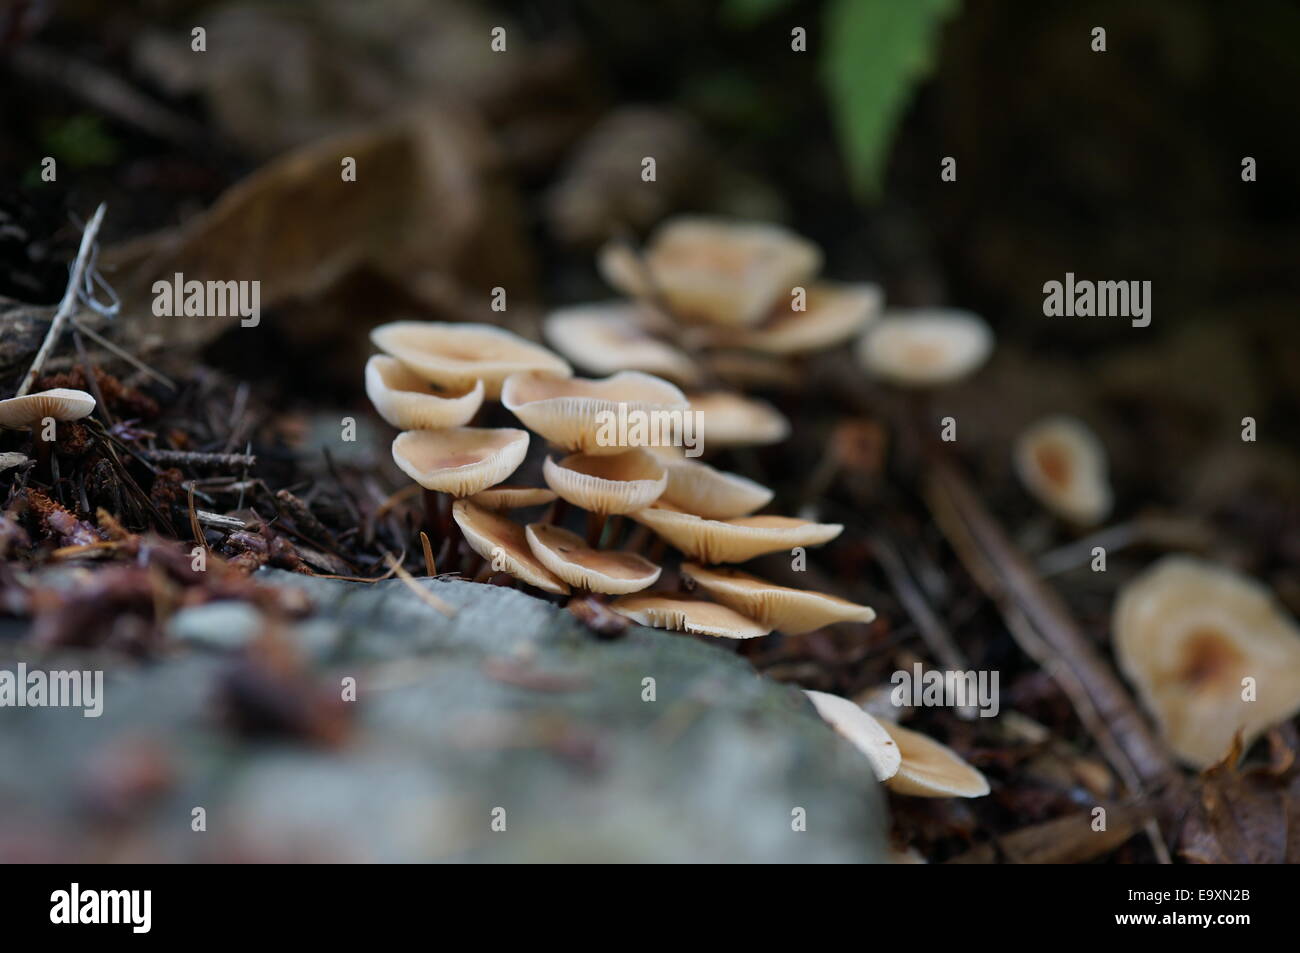 Wild Mushrooms on tree bark Stock Photo